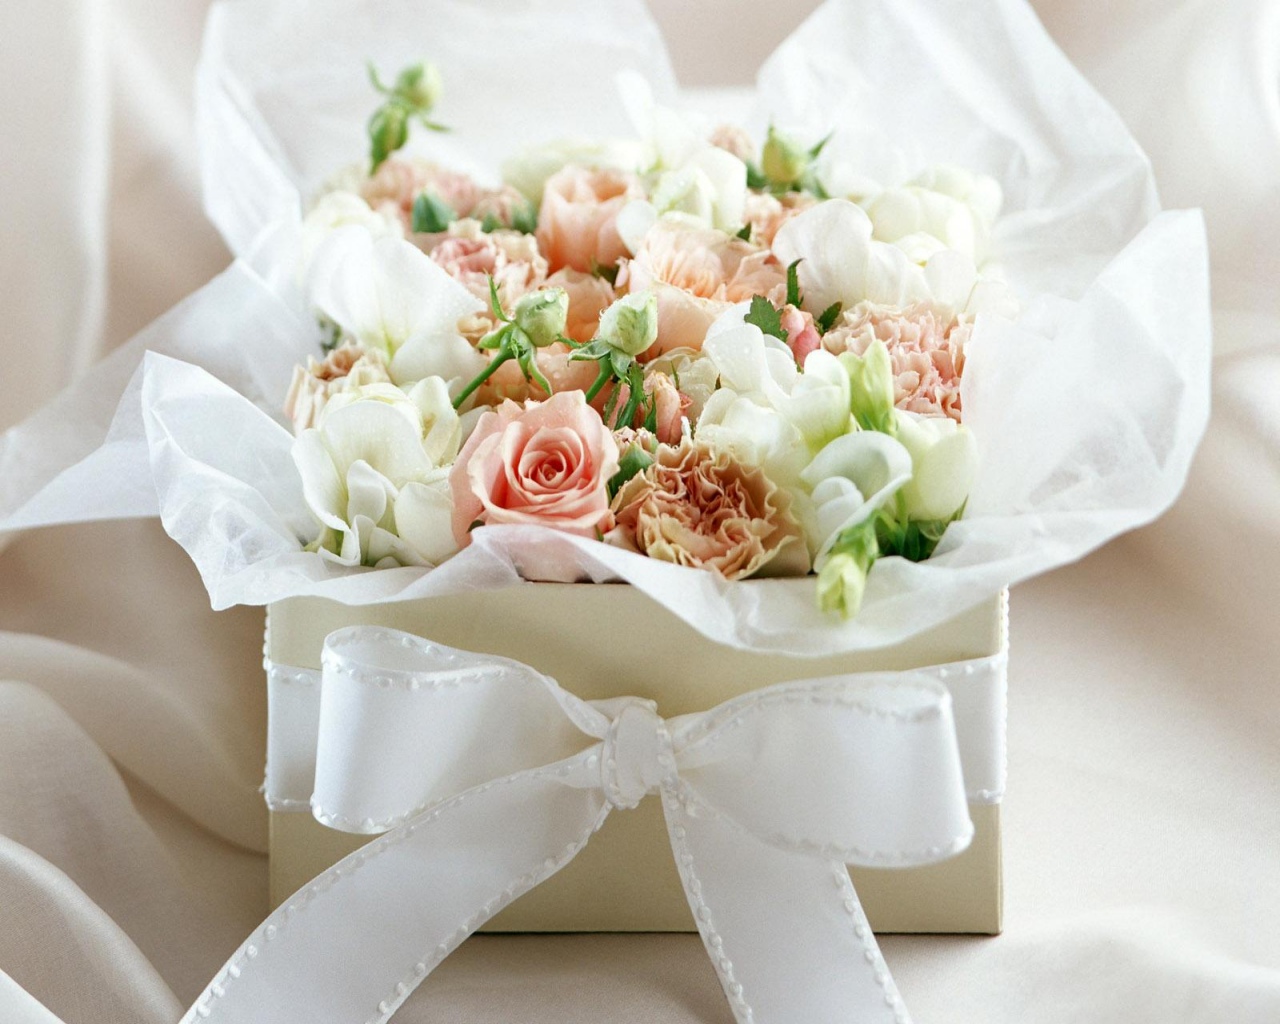 white roses bouquet wallpaper